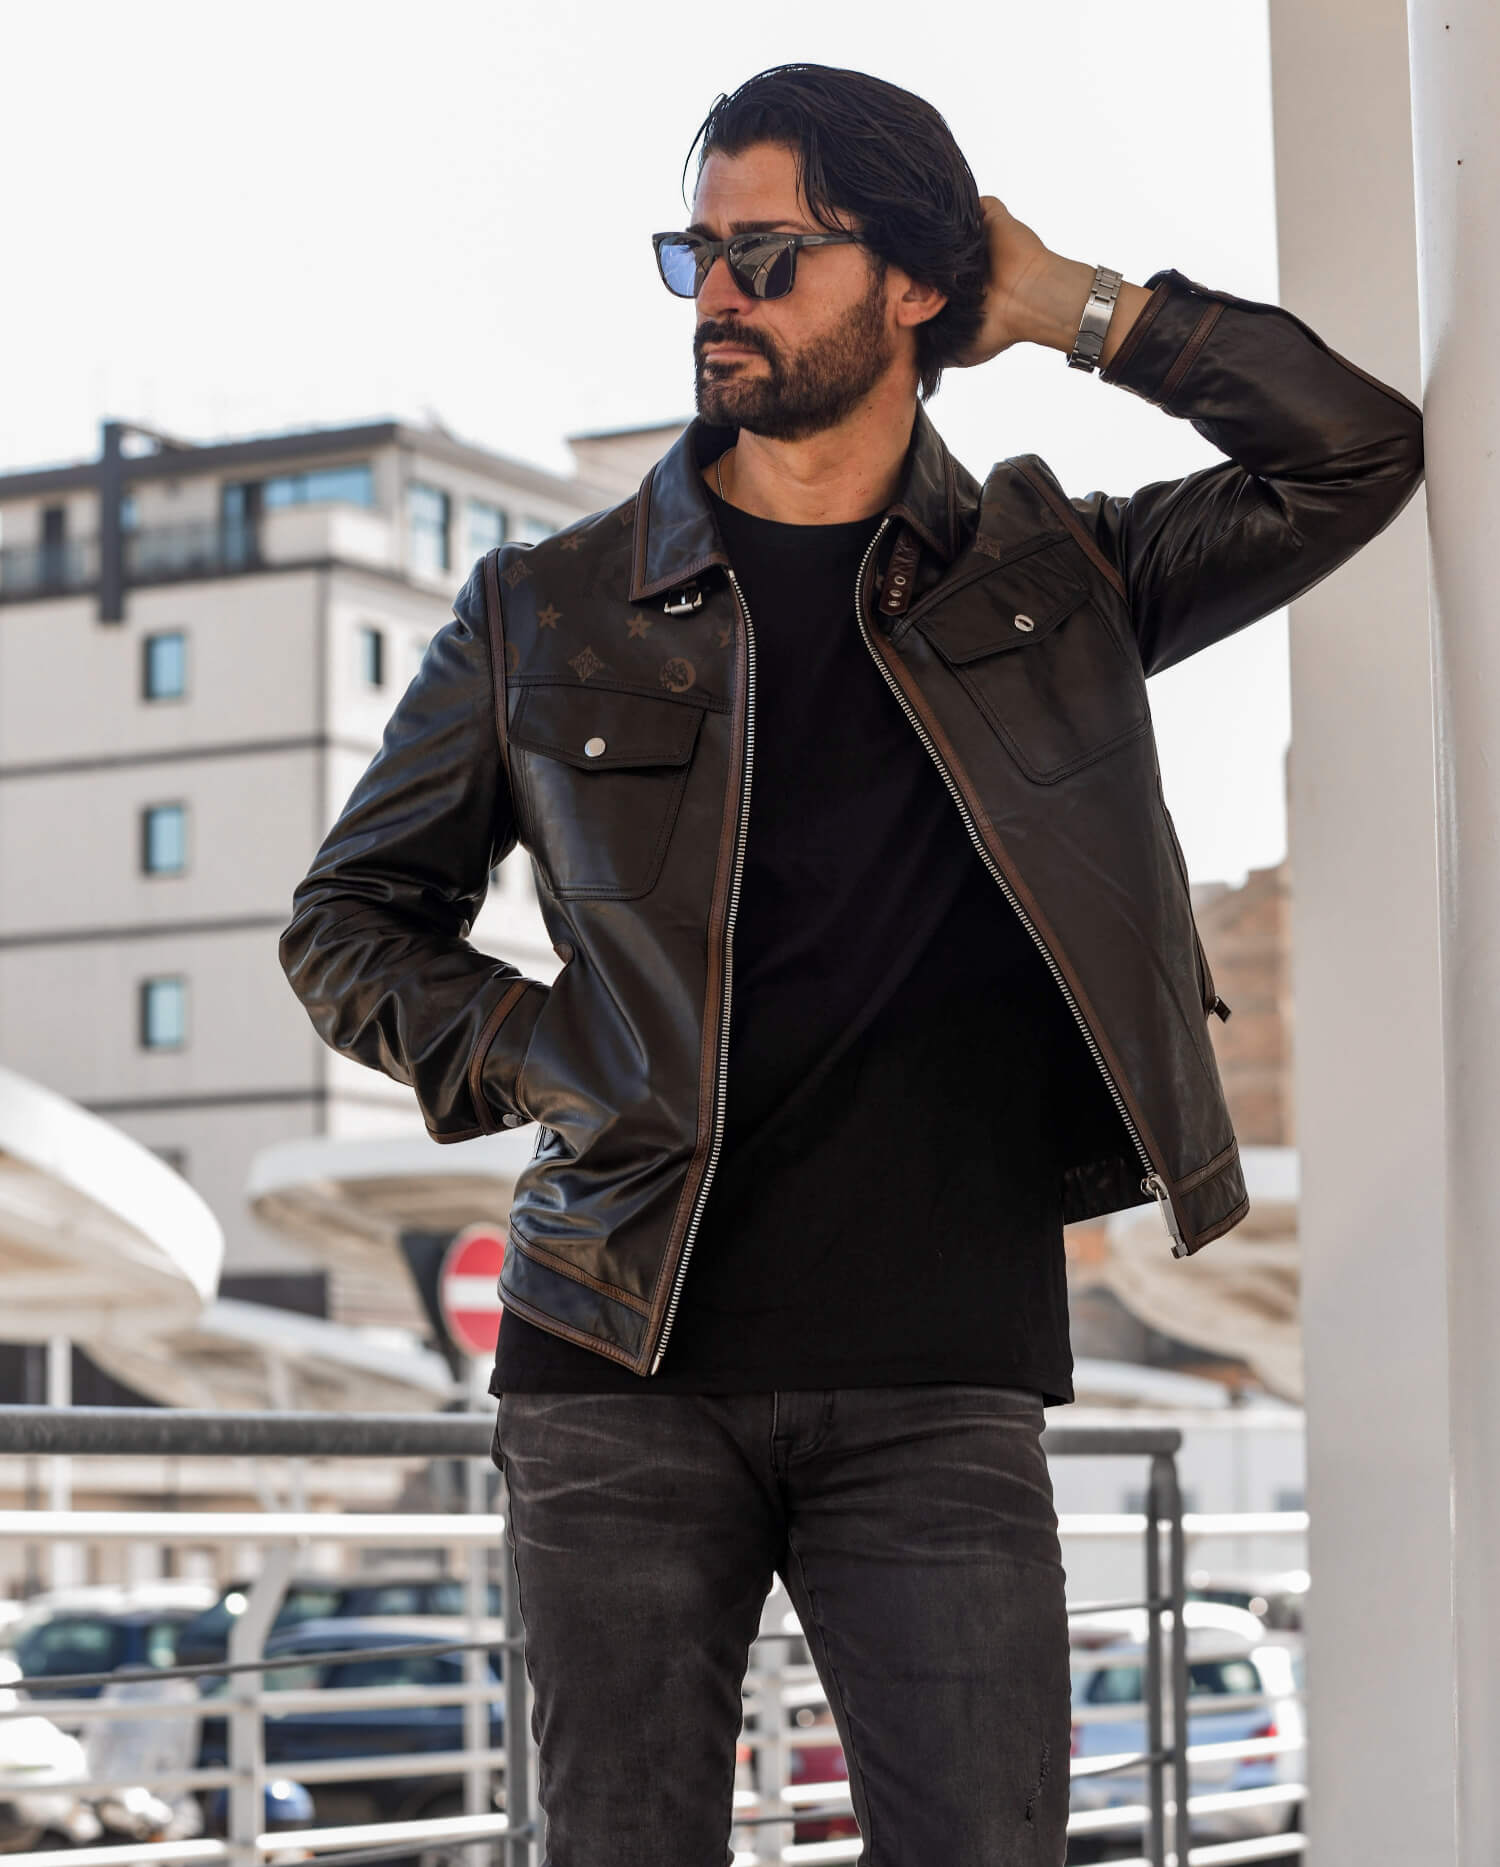 Mens Trucker Leather Jacket Black Classic Lambskin Shirt Style